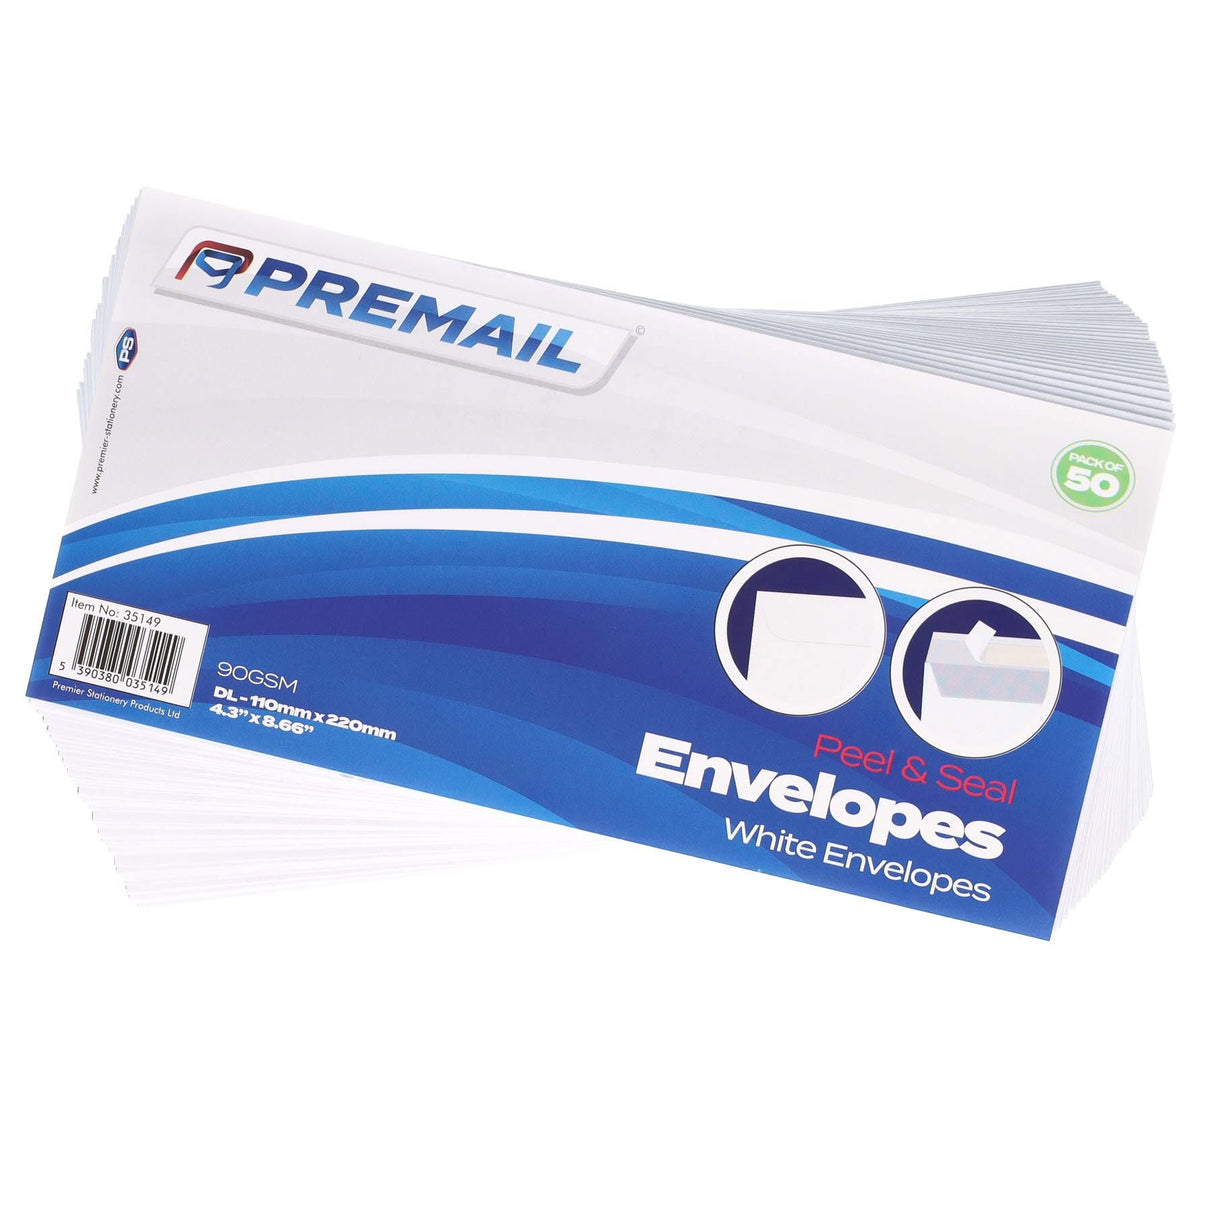 Premail DL Peel & Seal Envelopes - 110 x 220mm - White - Pack of 50-Envelopes-Premail|StationeryShop.co.uk